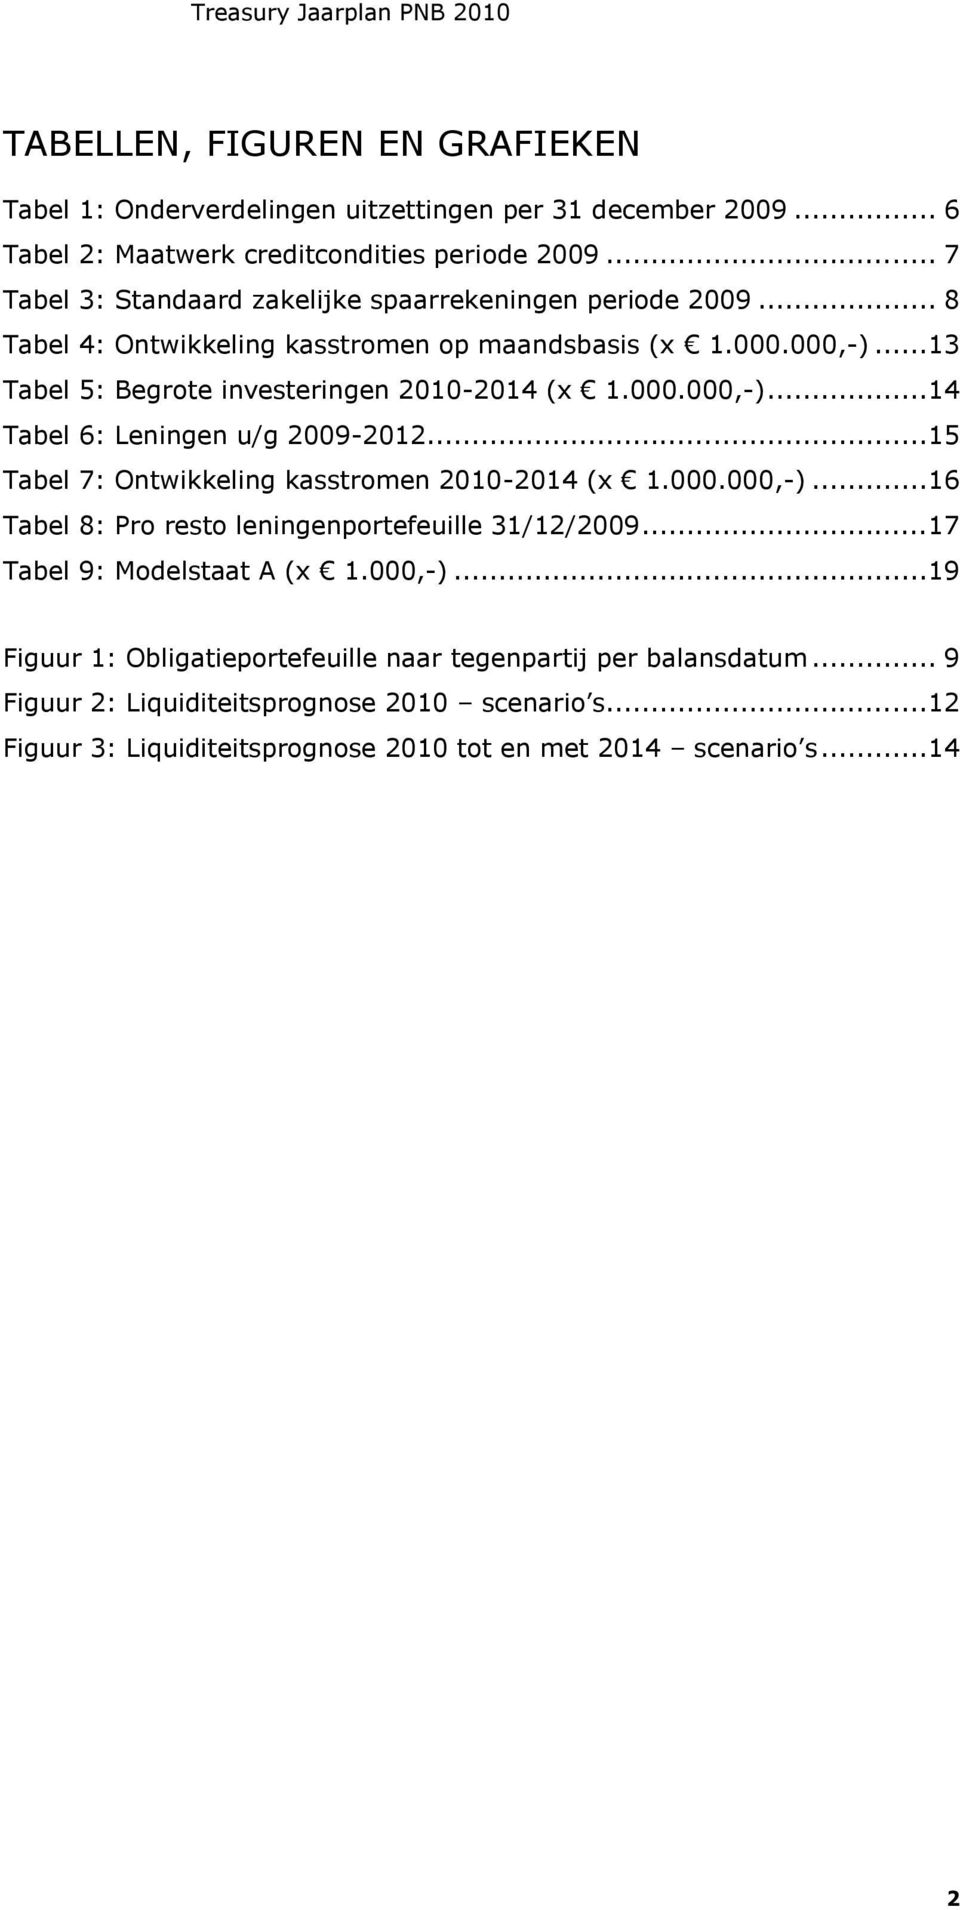 000.000,-)...14 Tabel 6: Leningen u/g 2009-2012...15 Tabel 7: Ontwikkeling kasstromen 2010-2014 (x 1.000.000,-)...16 Tabel 8: Pro resto leningenportefeuille 31/12/2009.